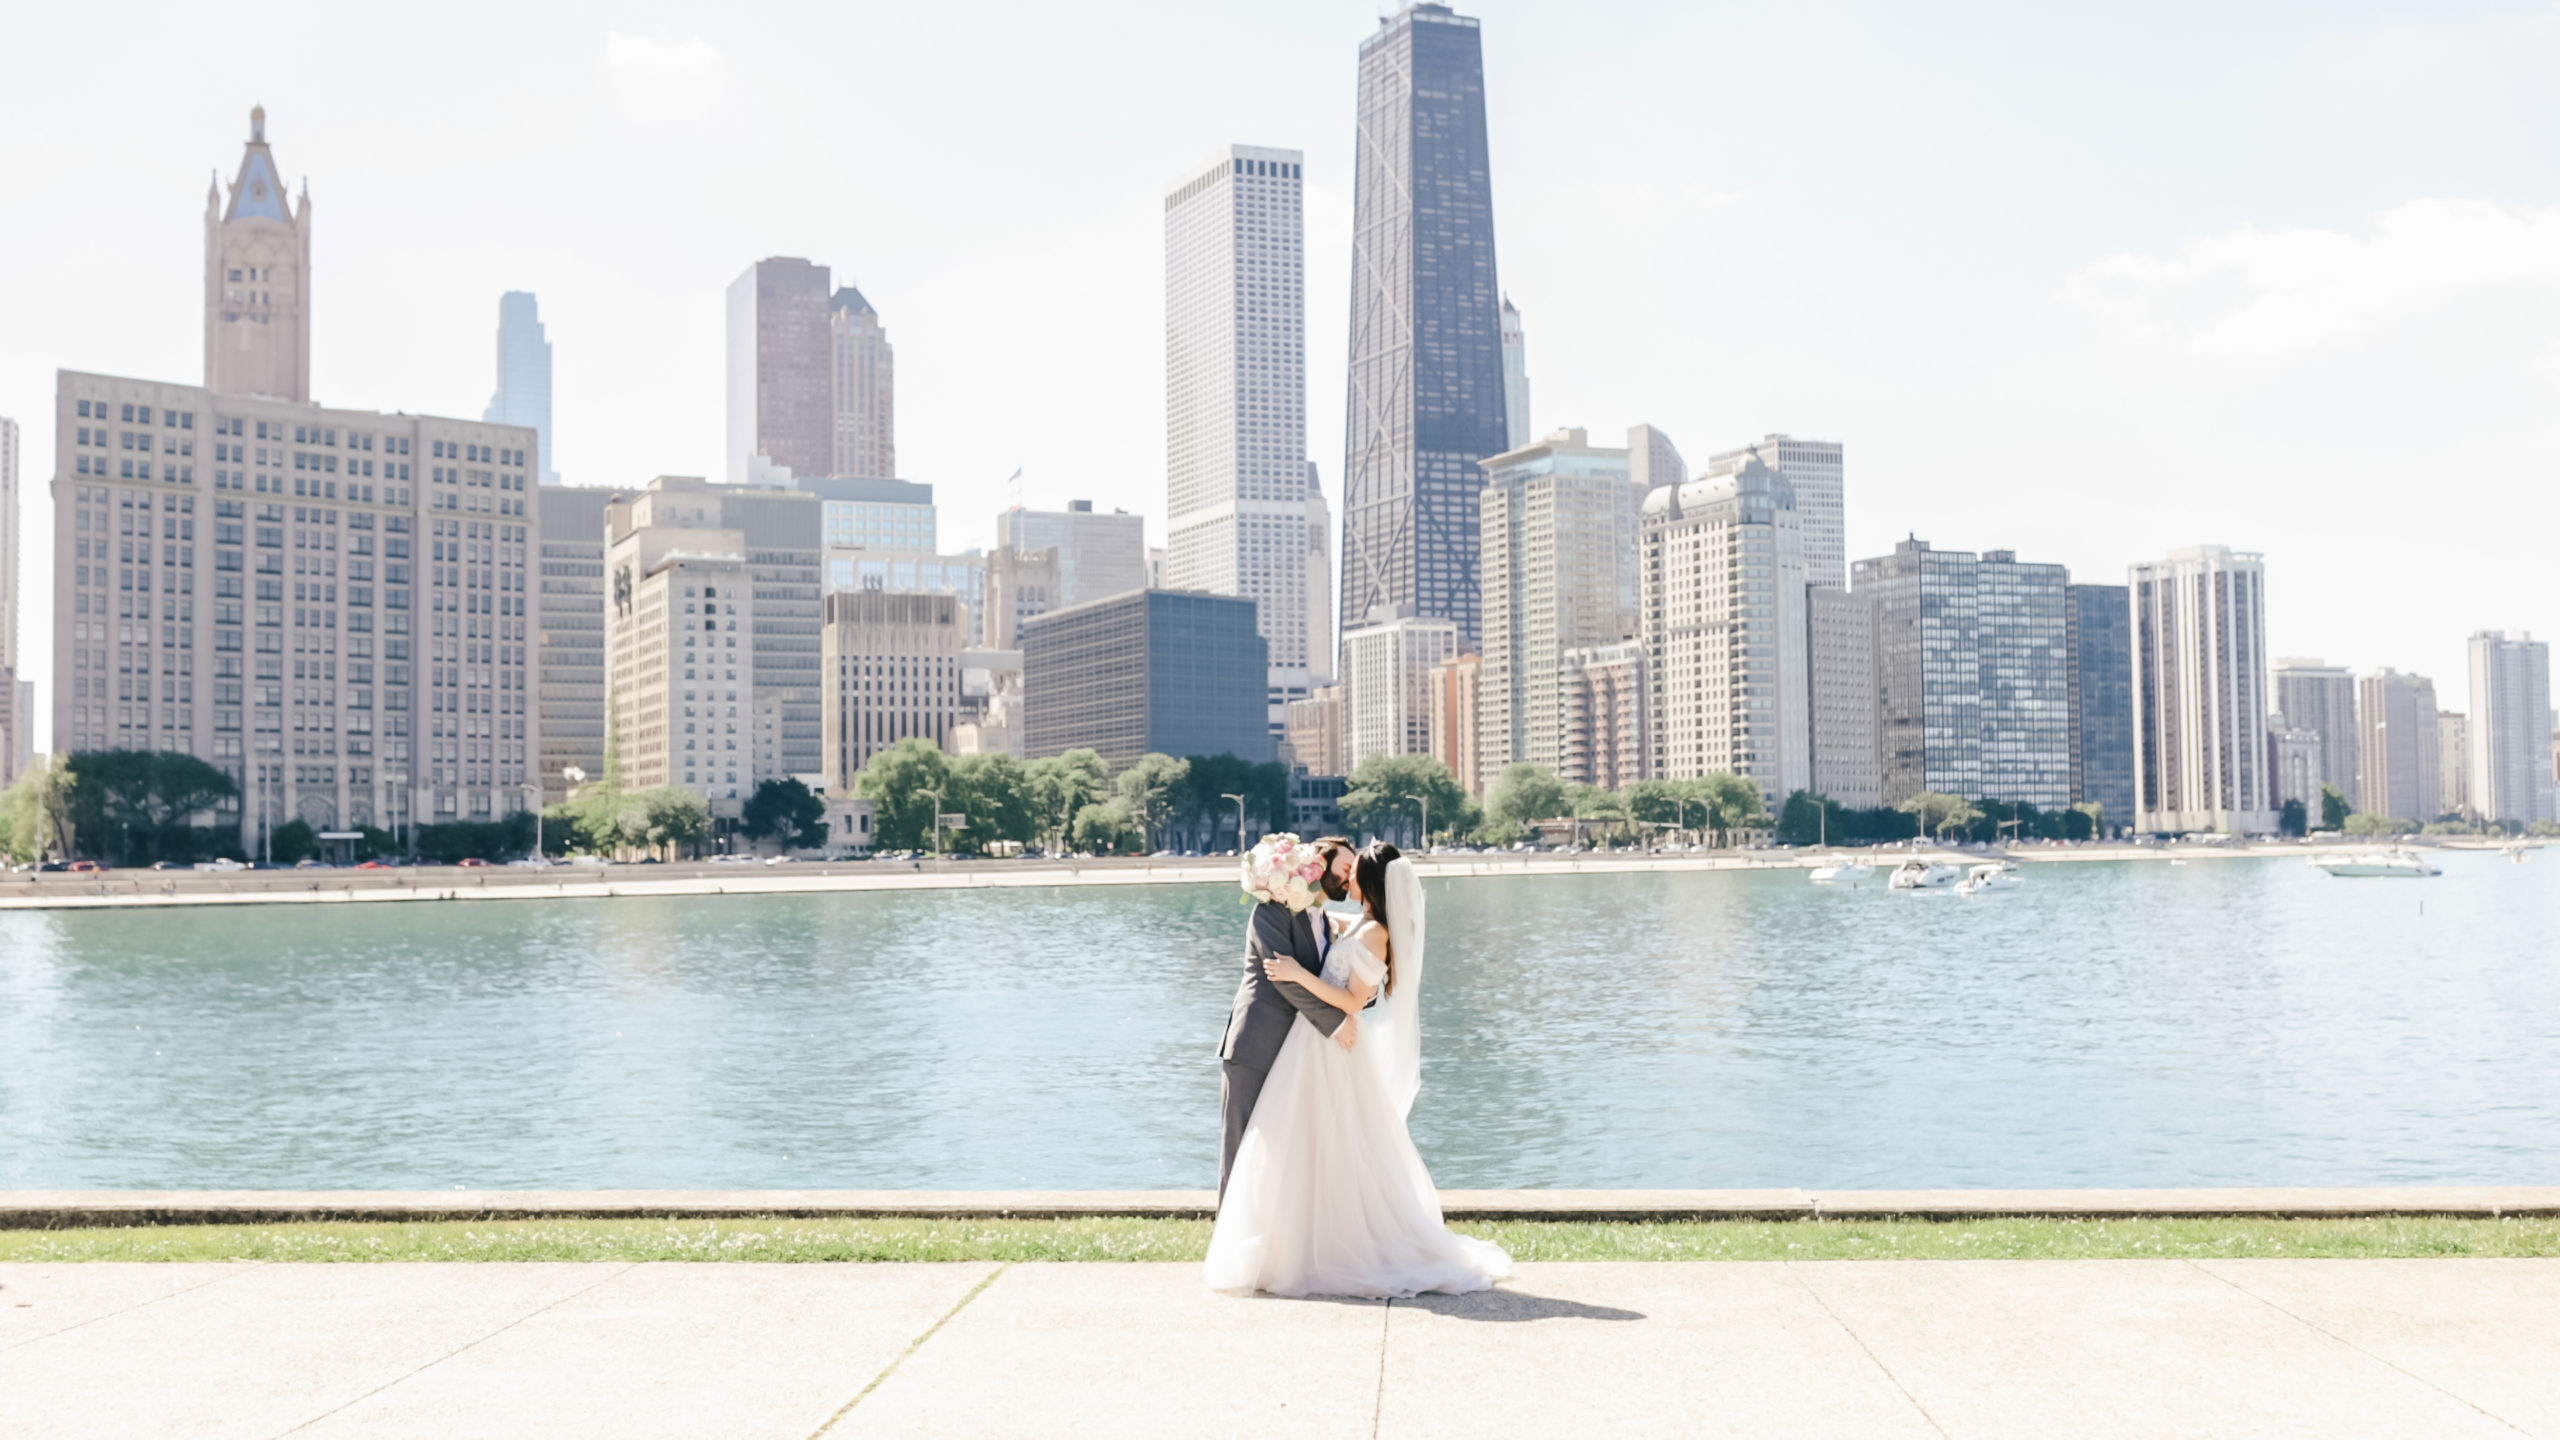 Chicago History Museum Wedding Video | Chicago, Illinois Wedding Venue | Chicago Wedding Videographer Chaviano Creative